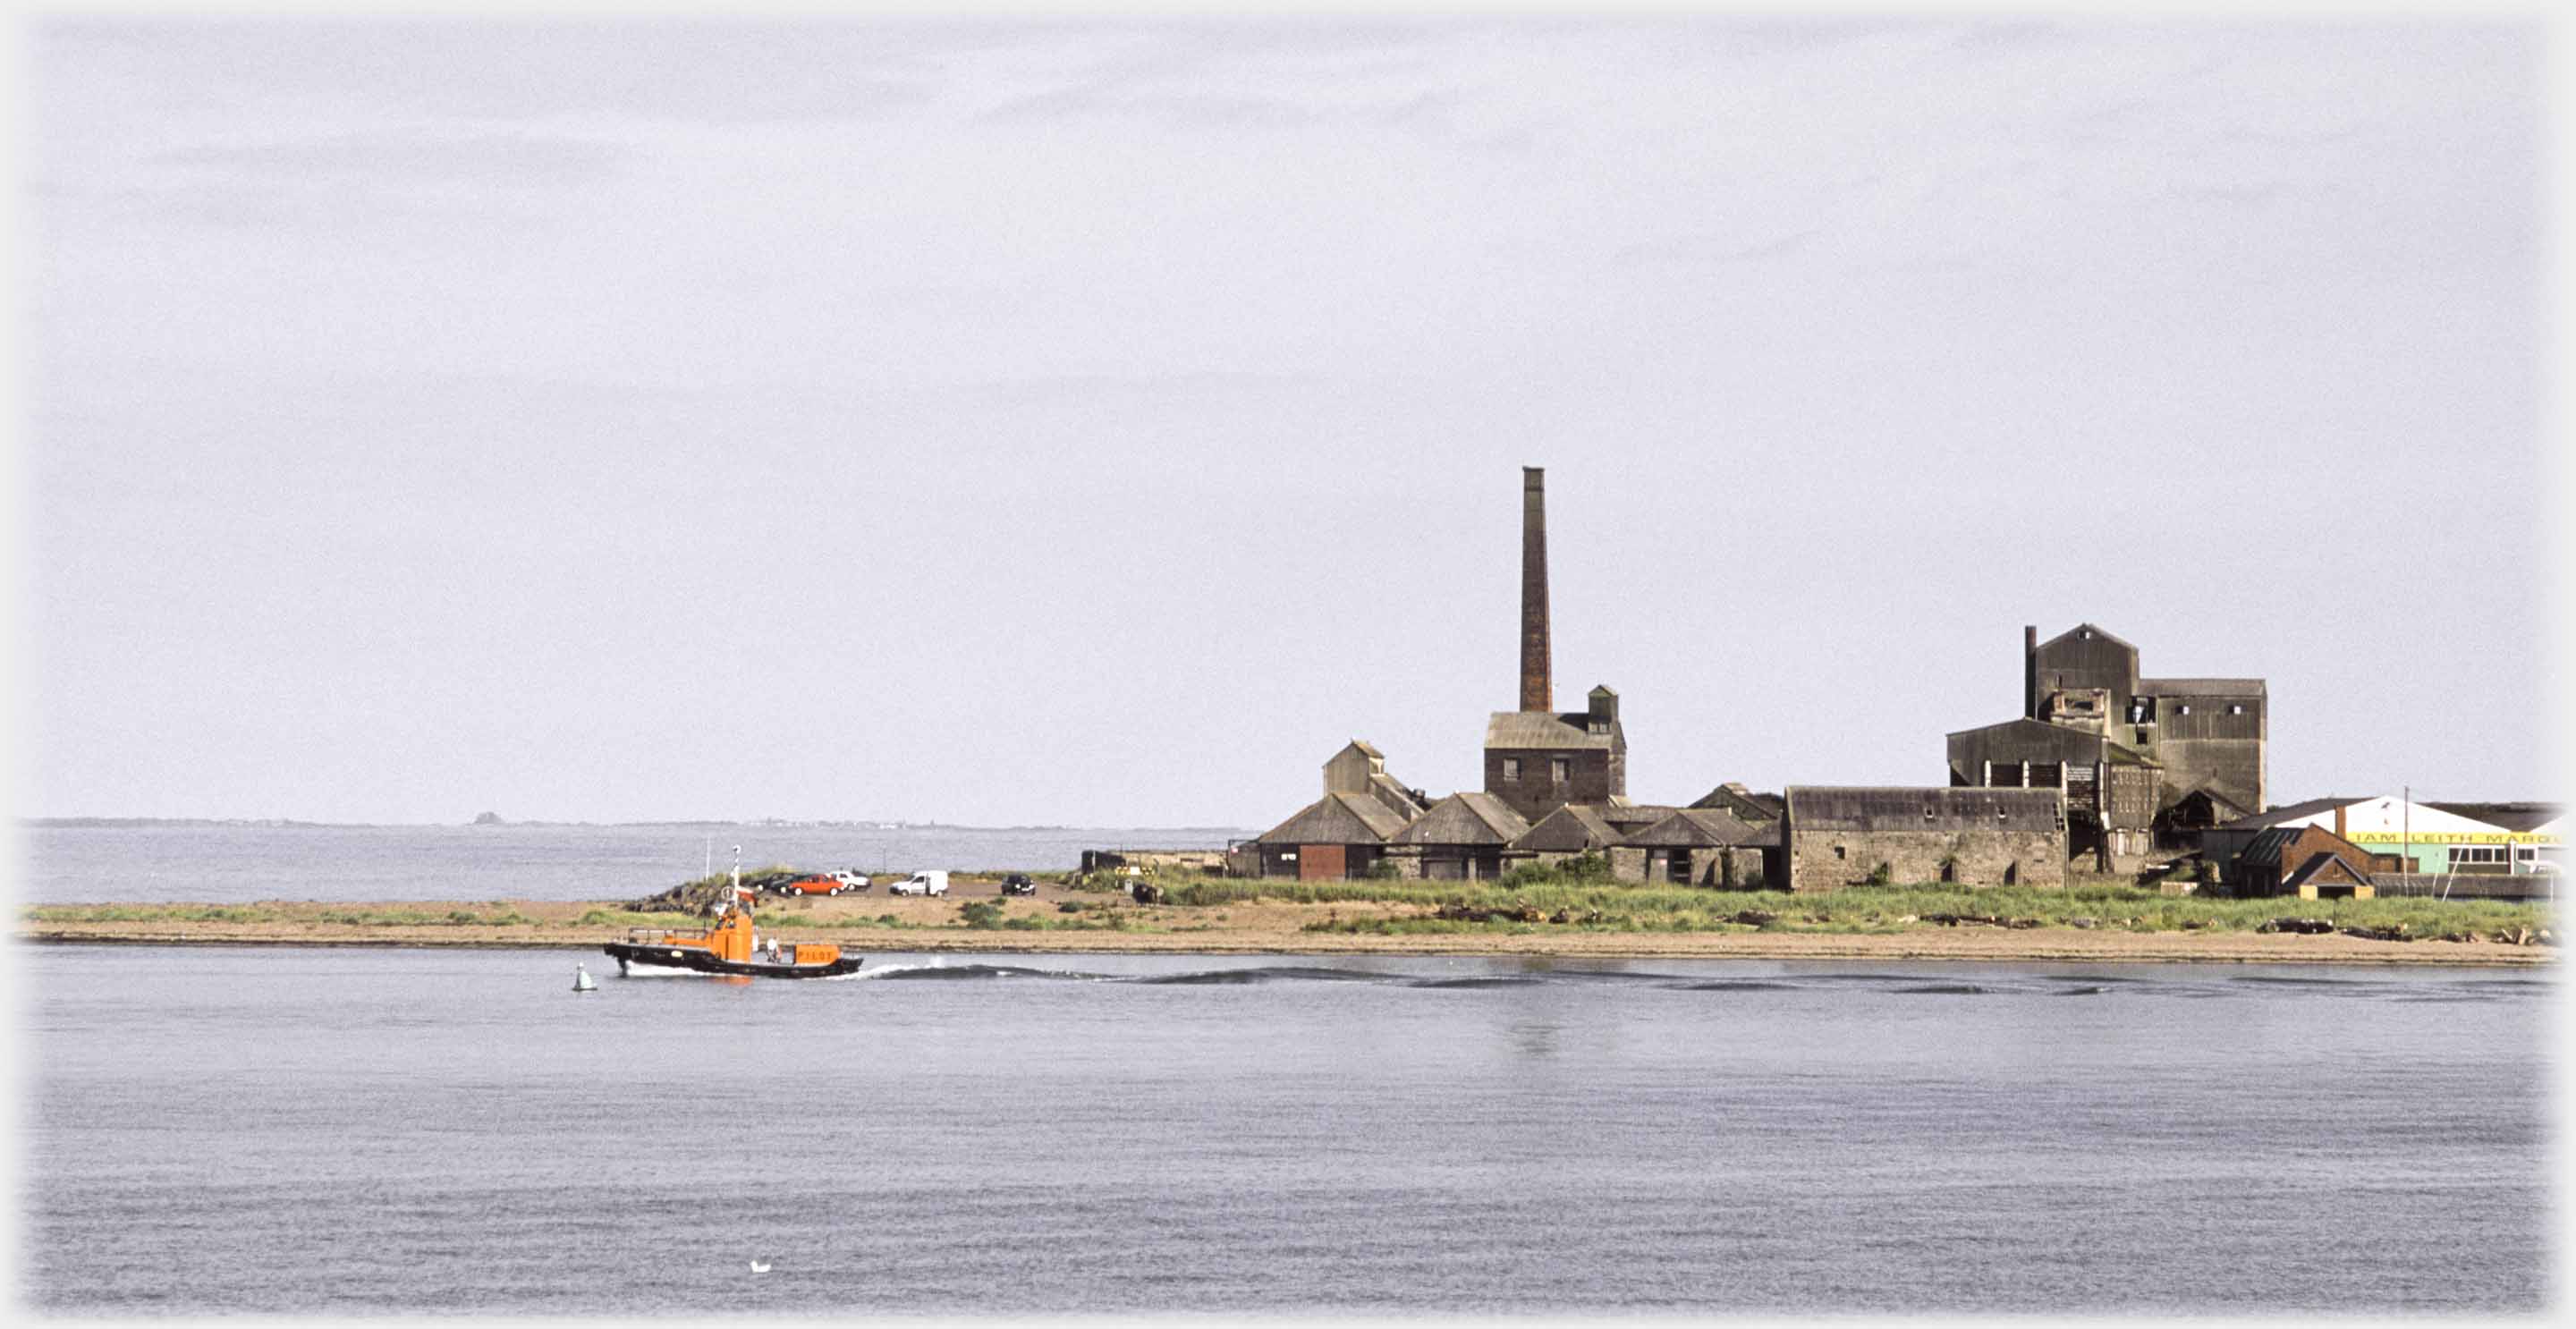 Factory, chimney, lifeboat passing, horizon Lindisfarne Castle.